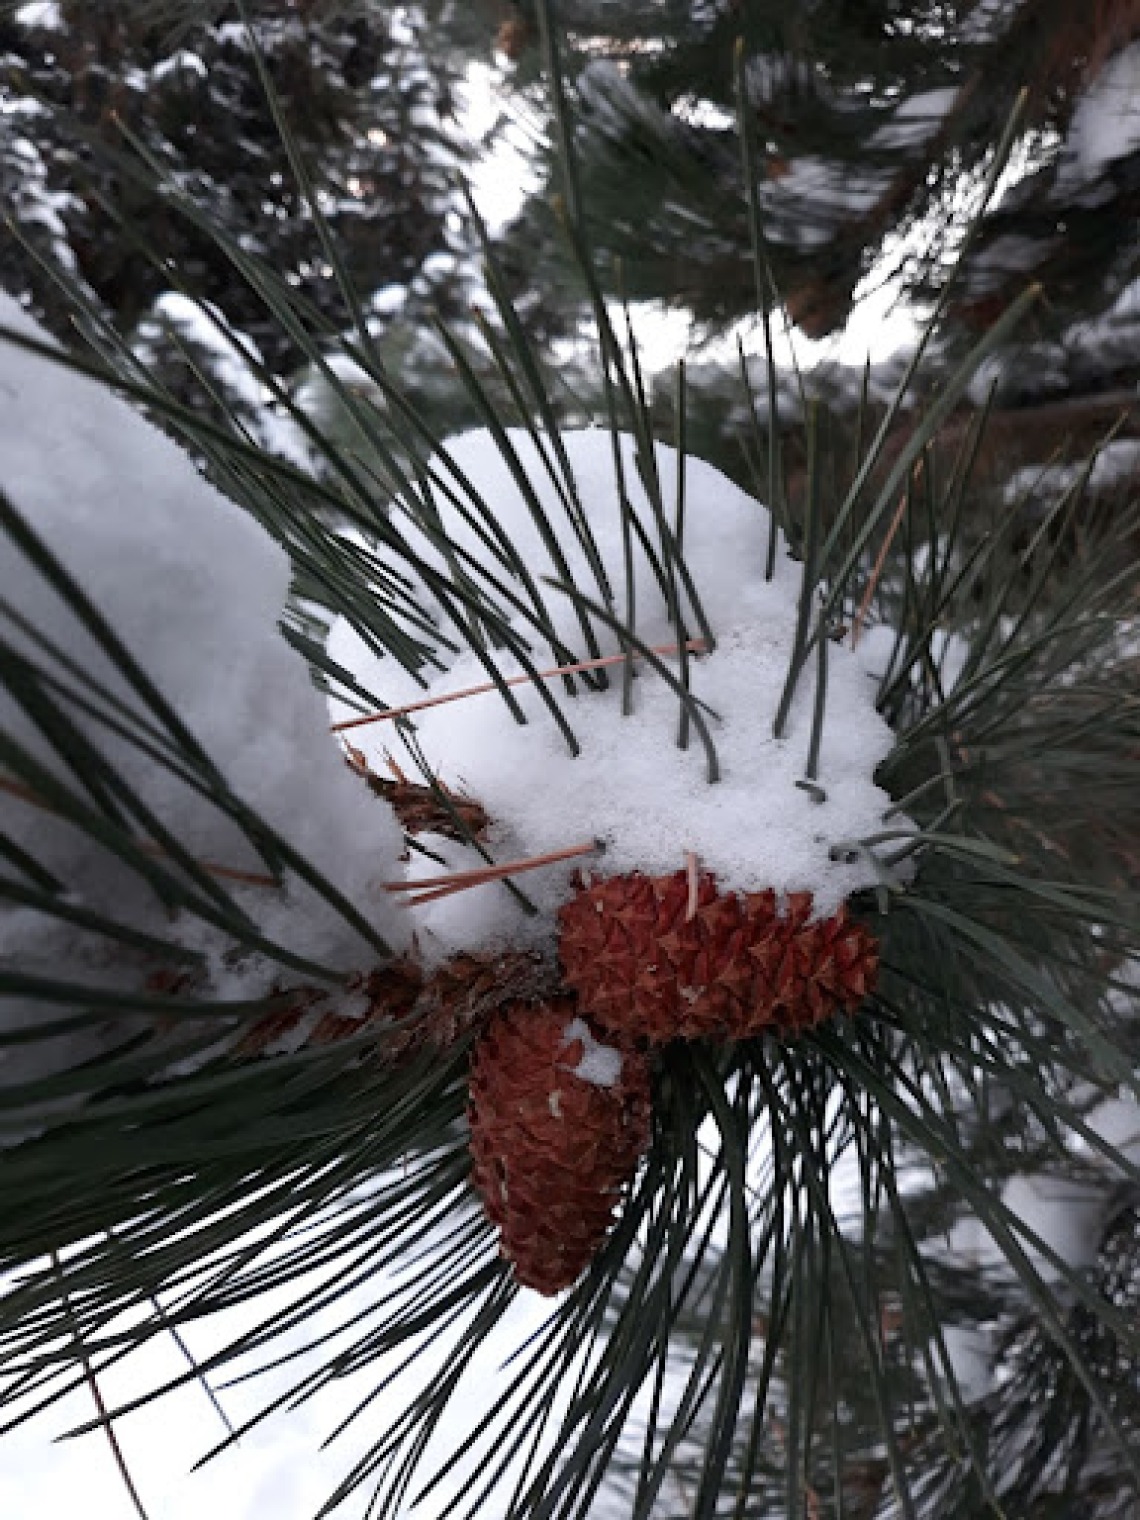 Snow on pine cones and needles